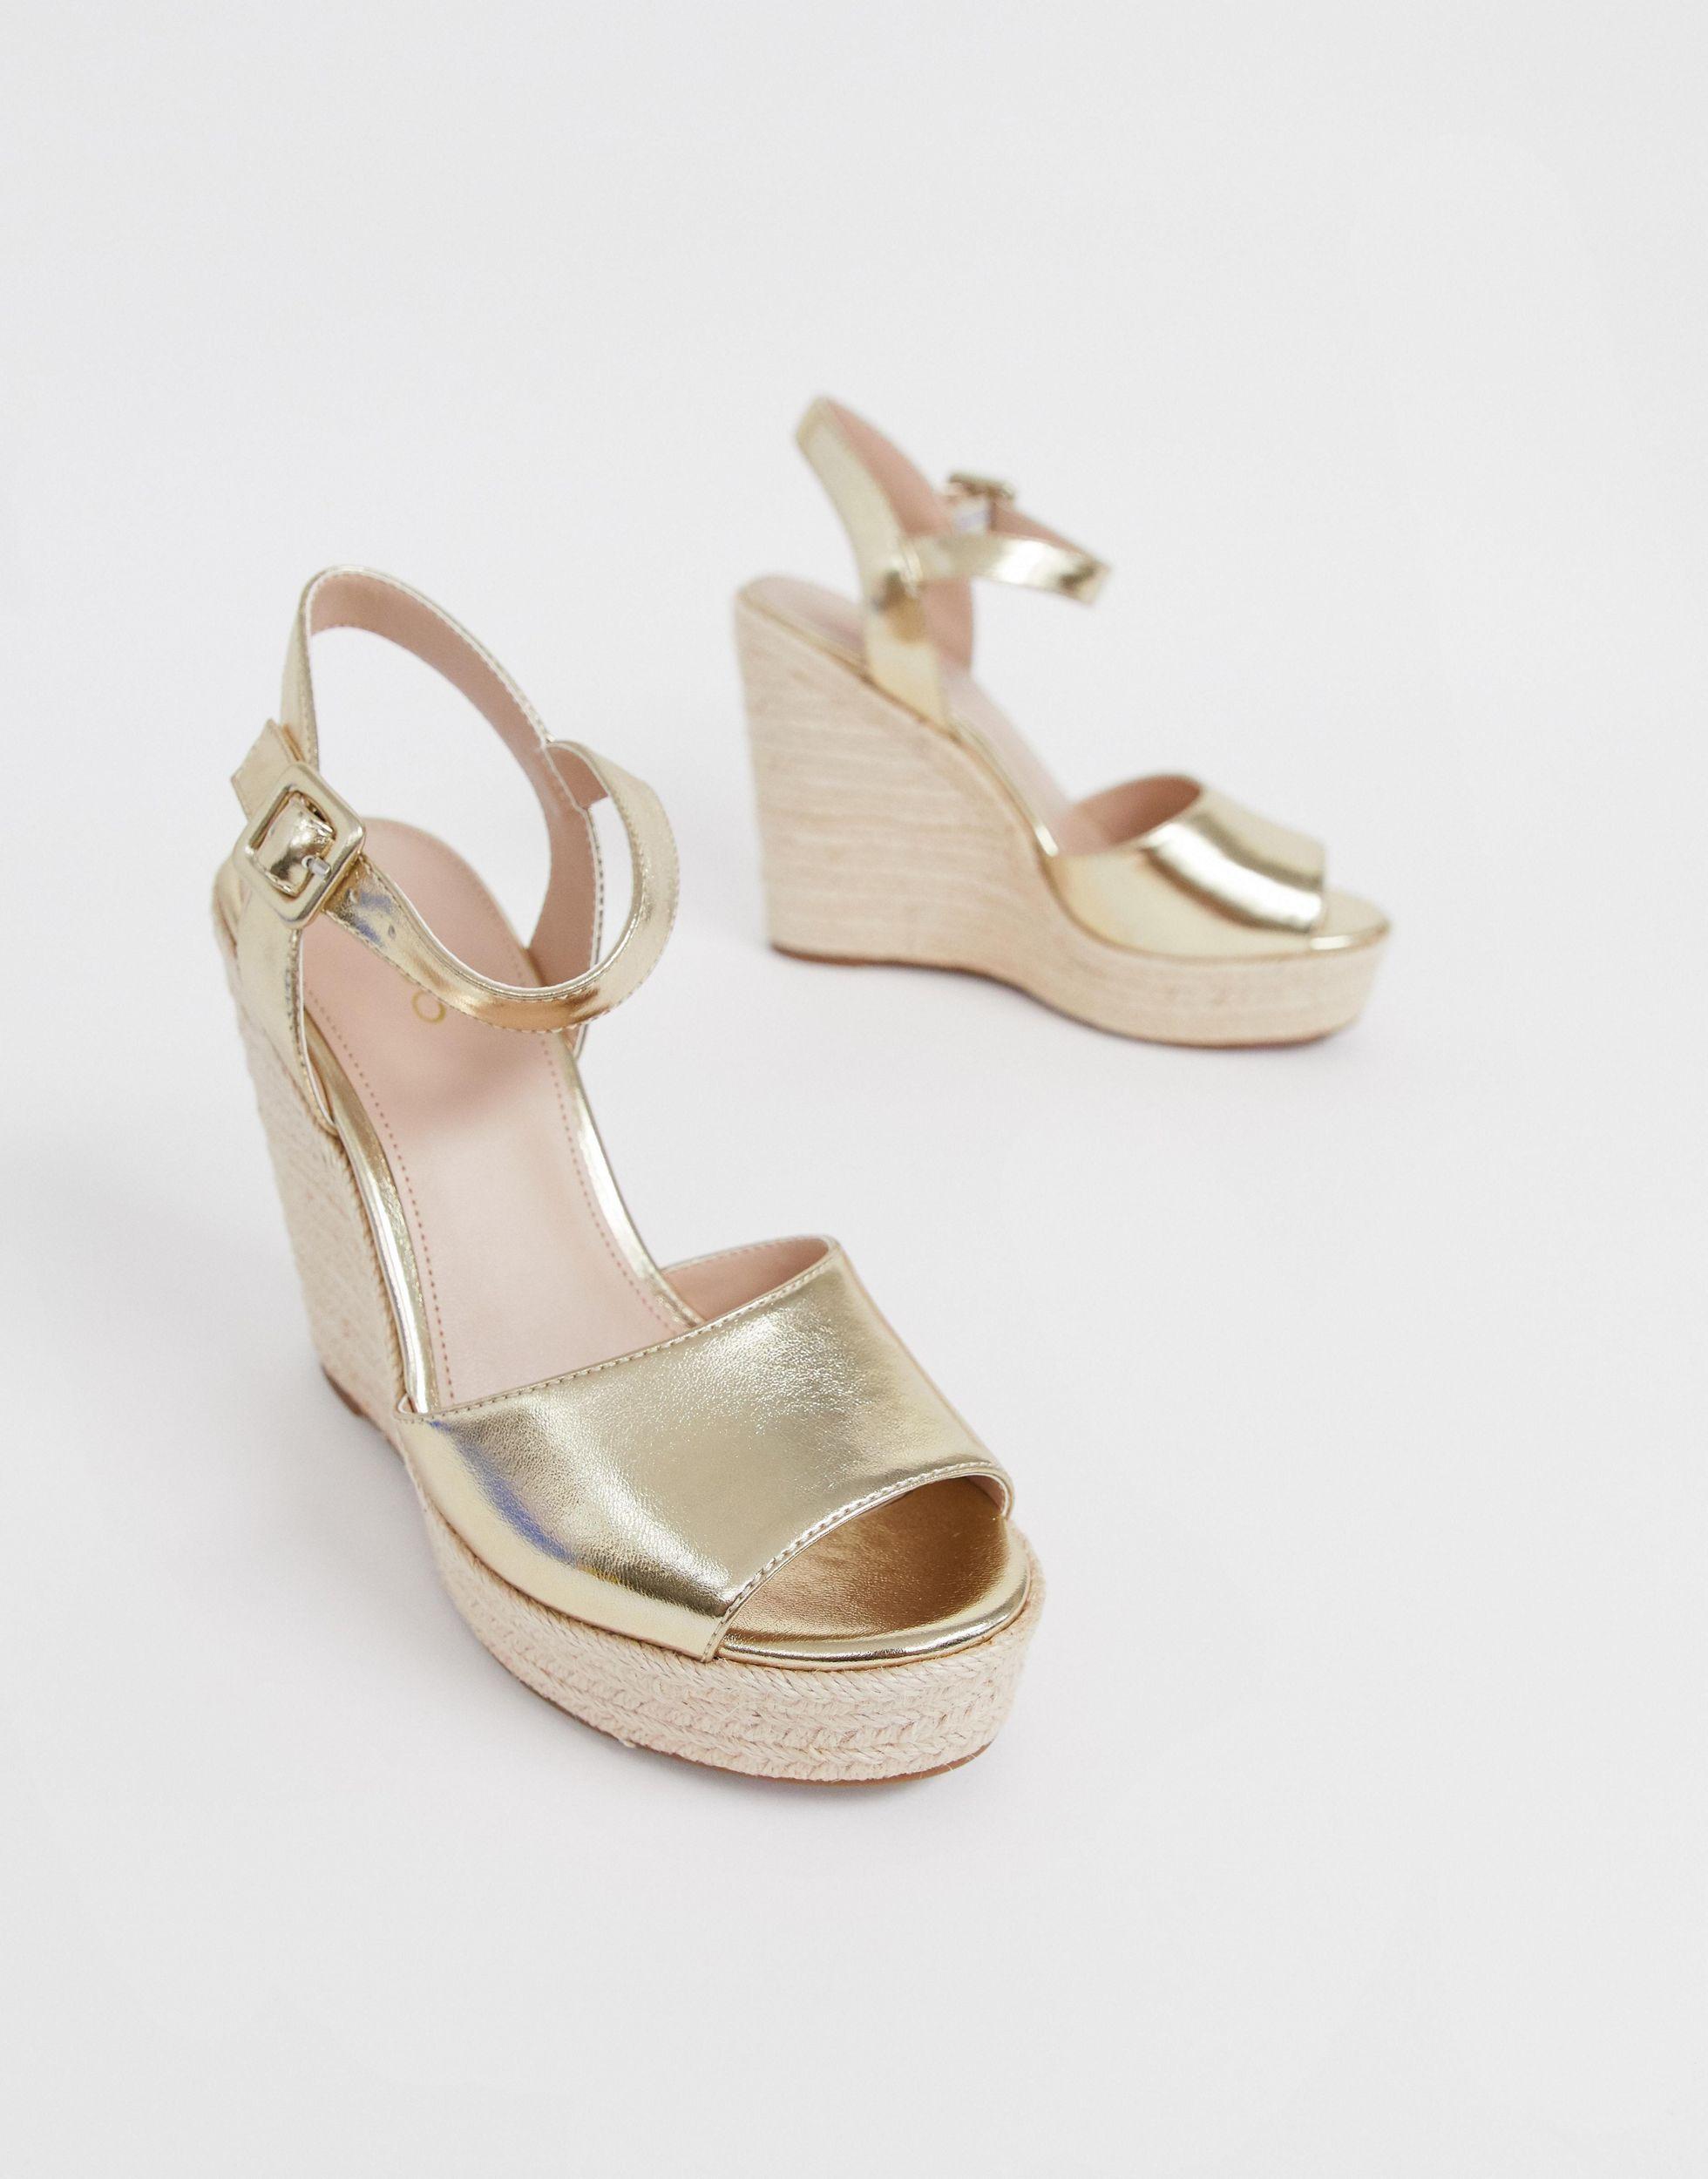 ALDO Leather Ybelani Platform Wedge Sandals in Gold (Metallic) -